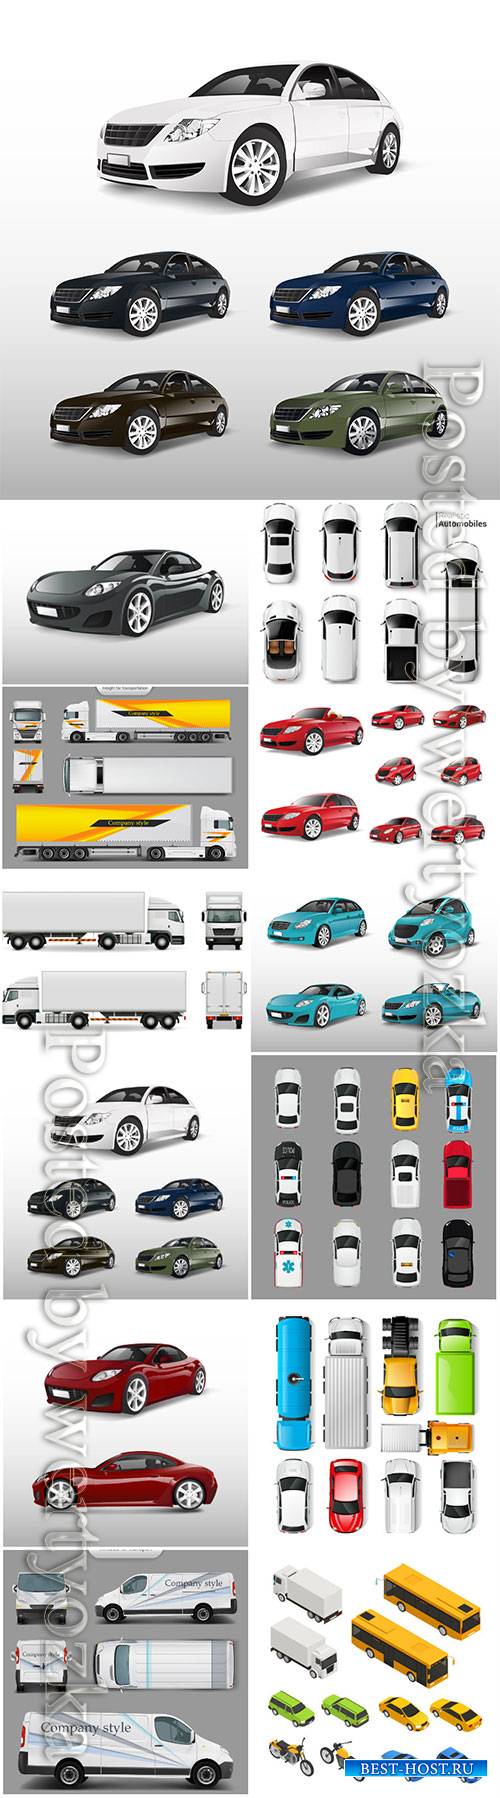 Cars various models vector